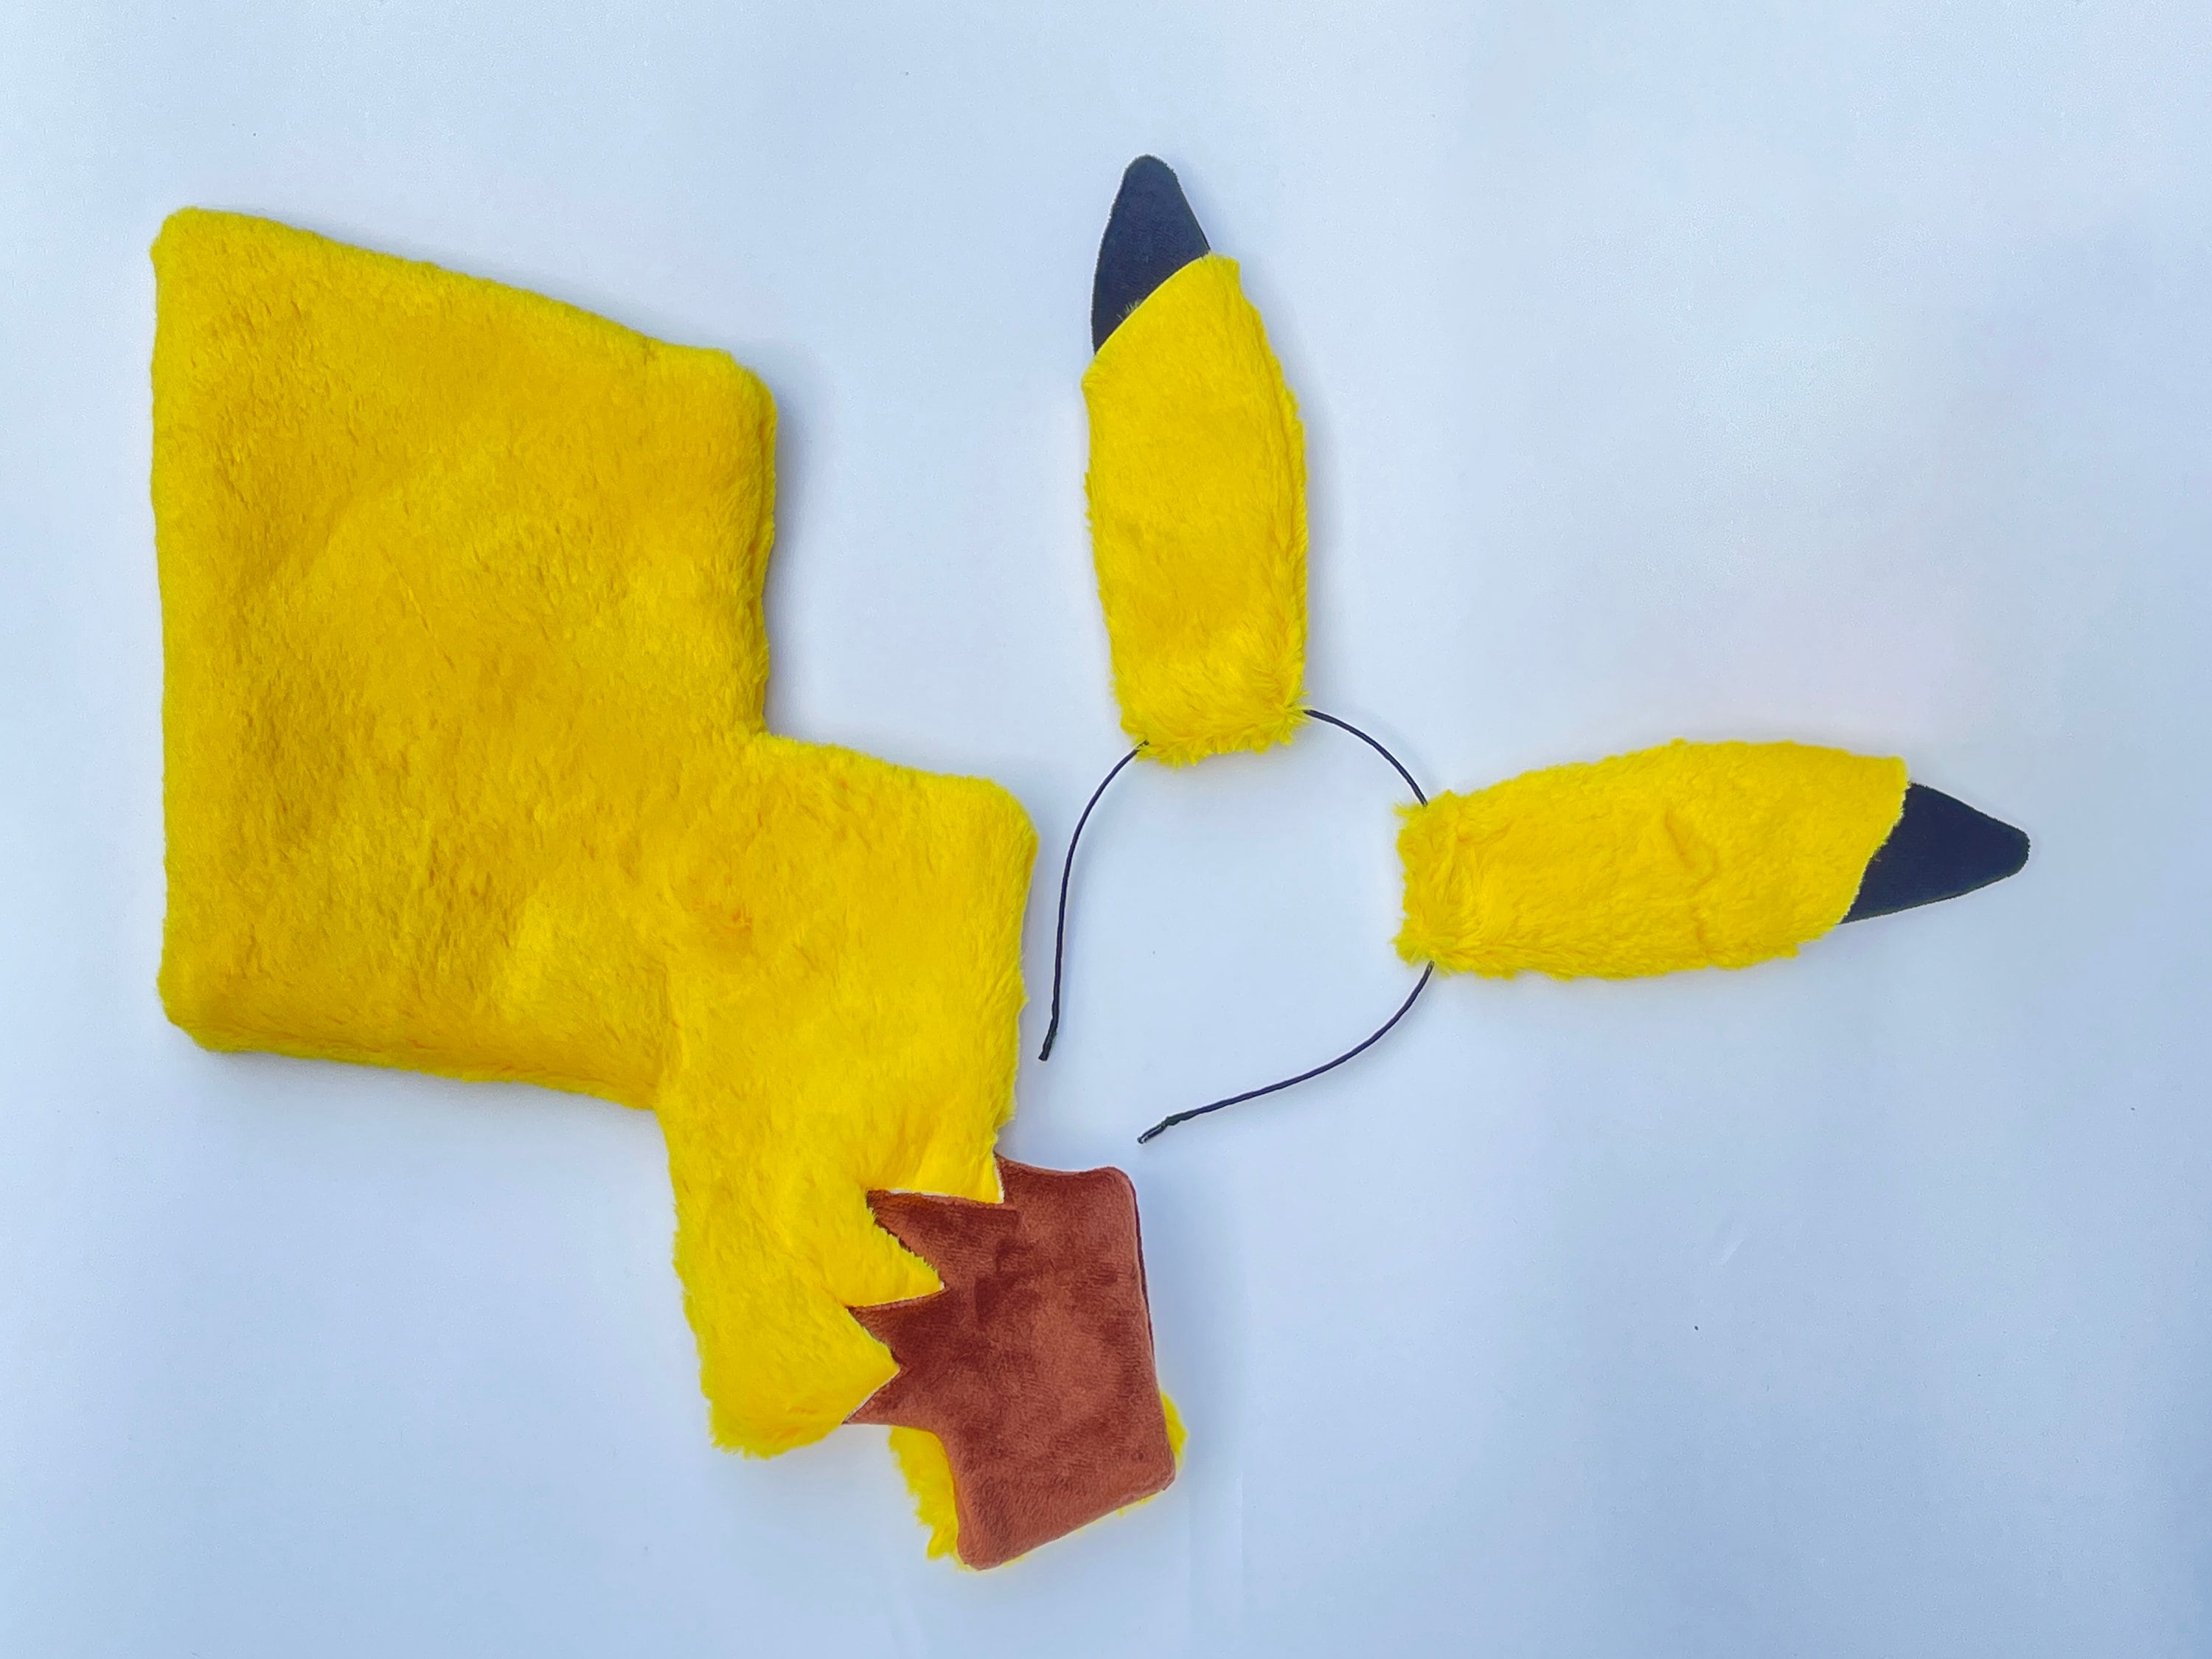 Bonnet Pikachu / bonnet Pokémon / chapeau pikachu / cadeau Pokémon / cadeau  Pikachu / costume Pokémon / cosplay pikachu -  Canada